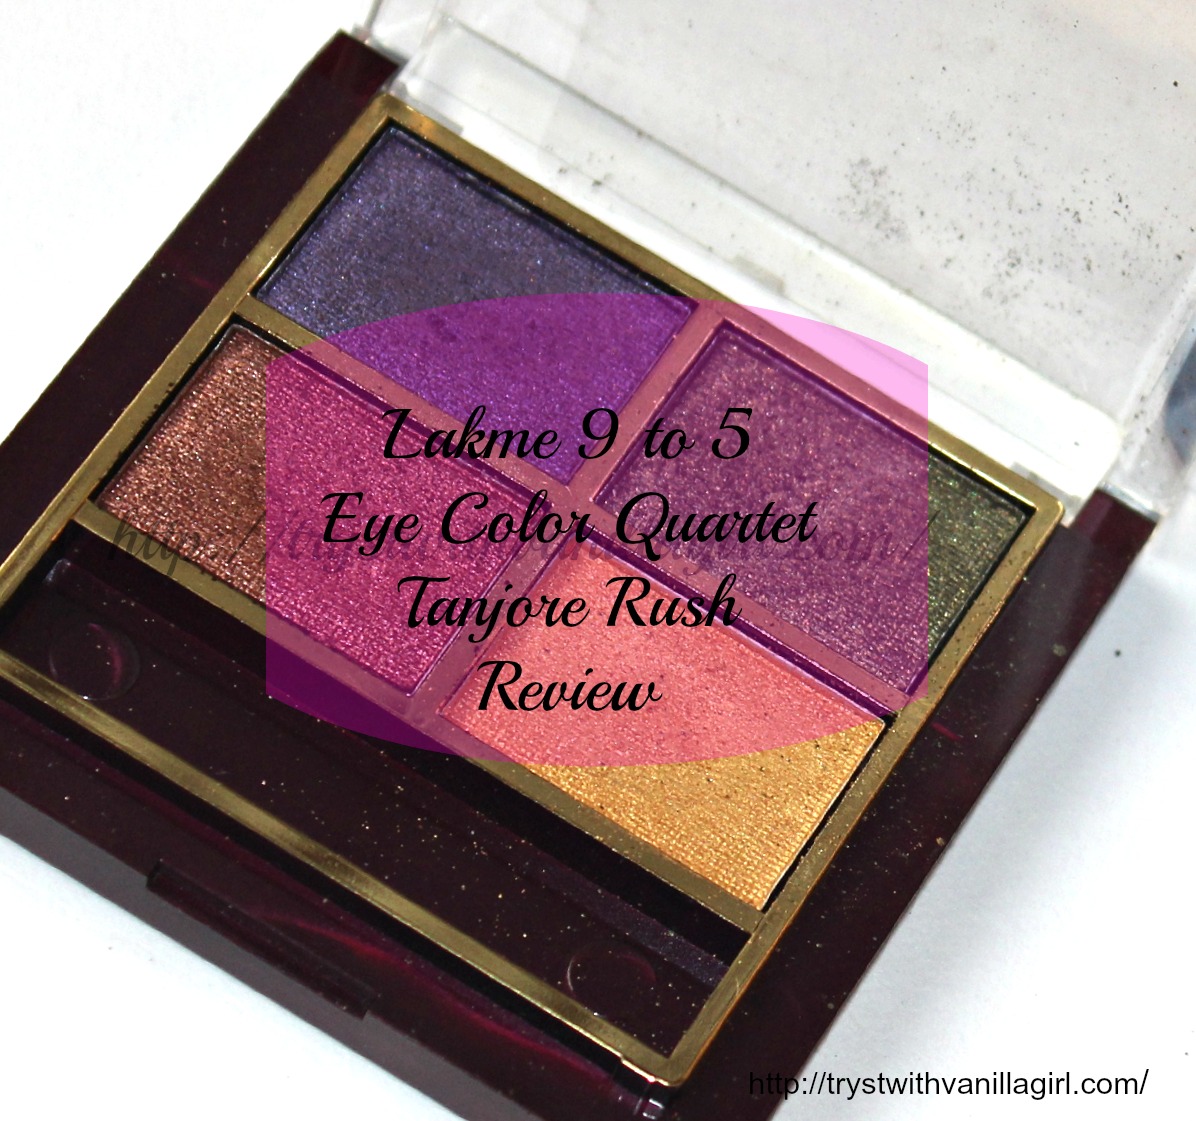 Lakme 9 to 5 Eye Color Quartet Tanjore Rush Review